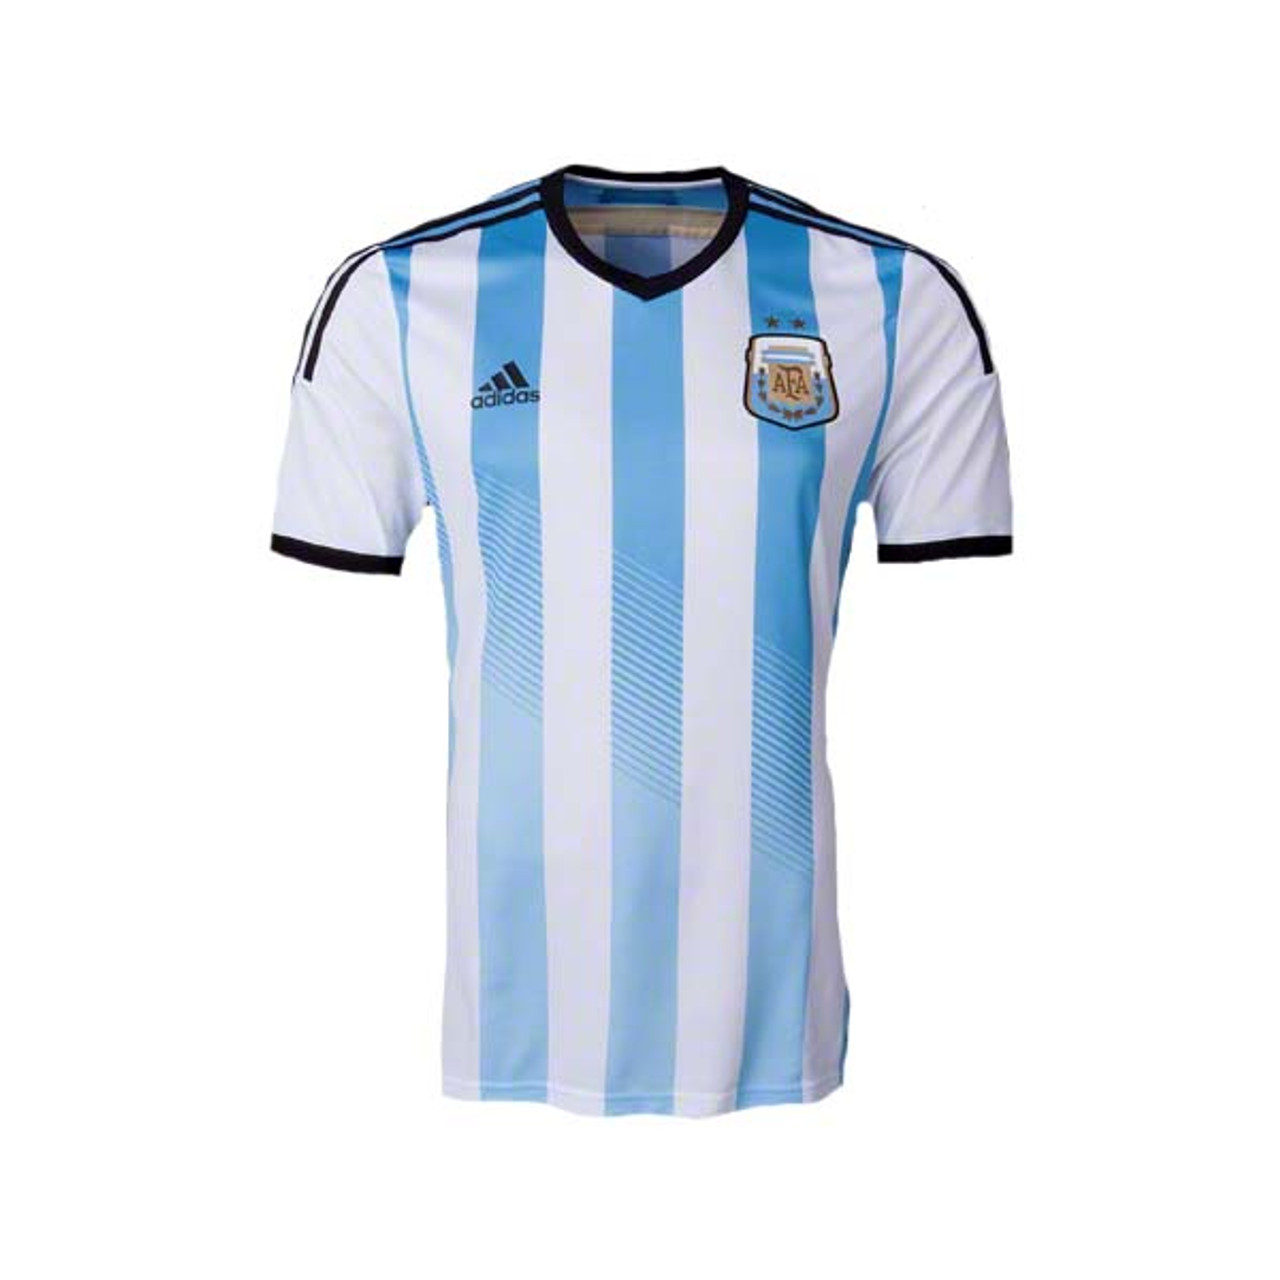 argentina jersey soccer